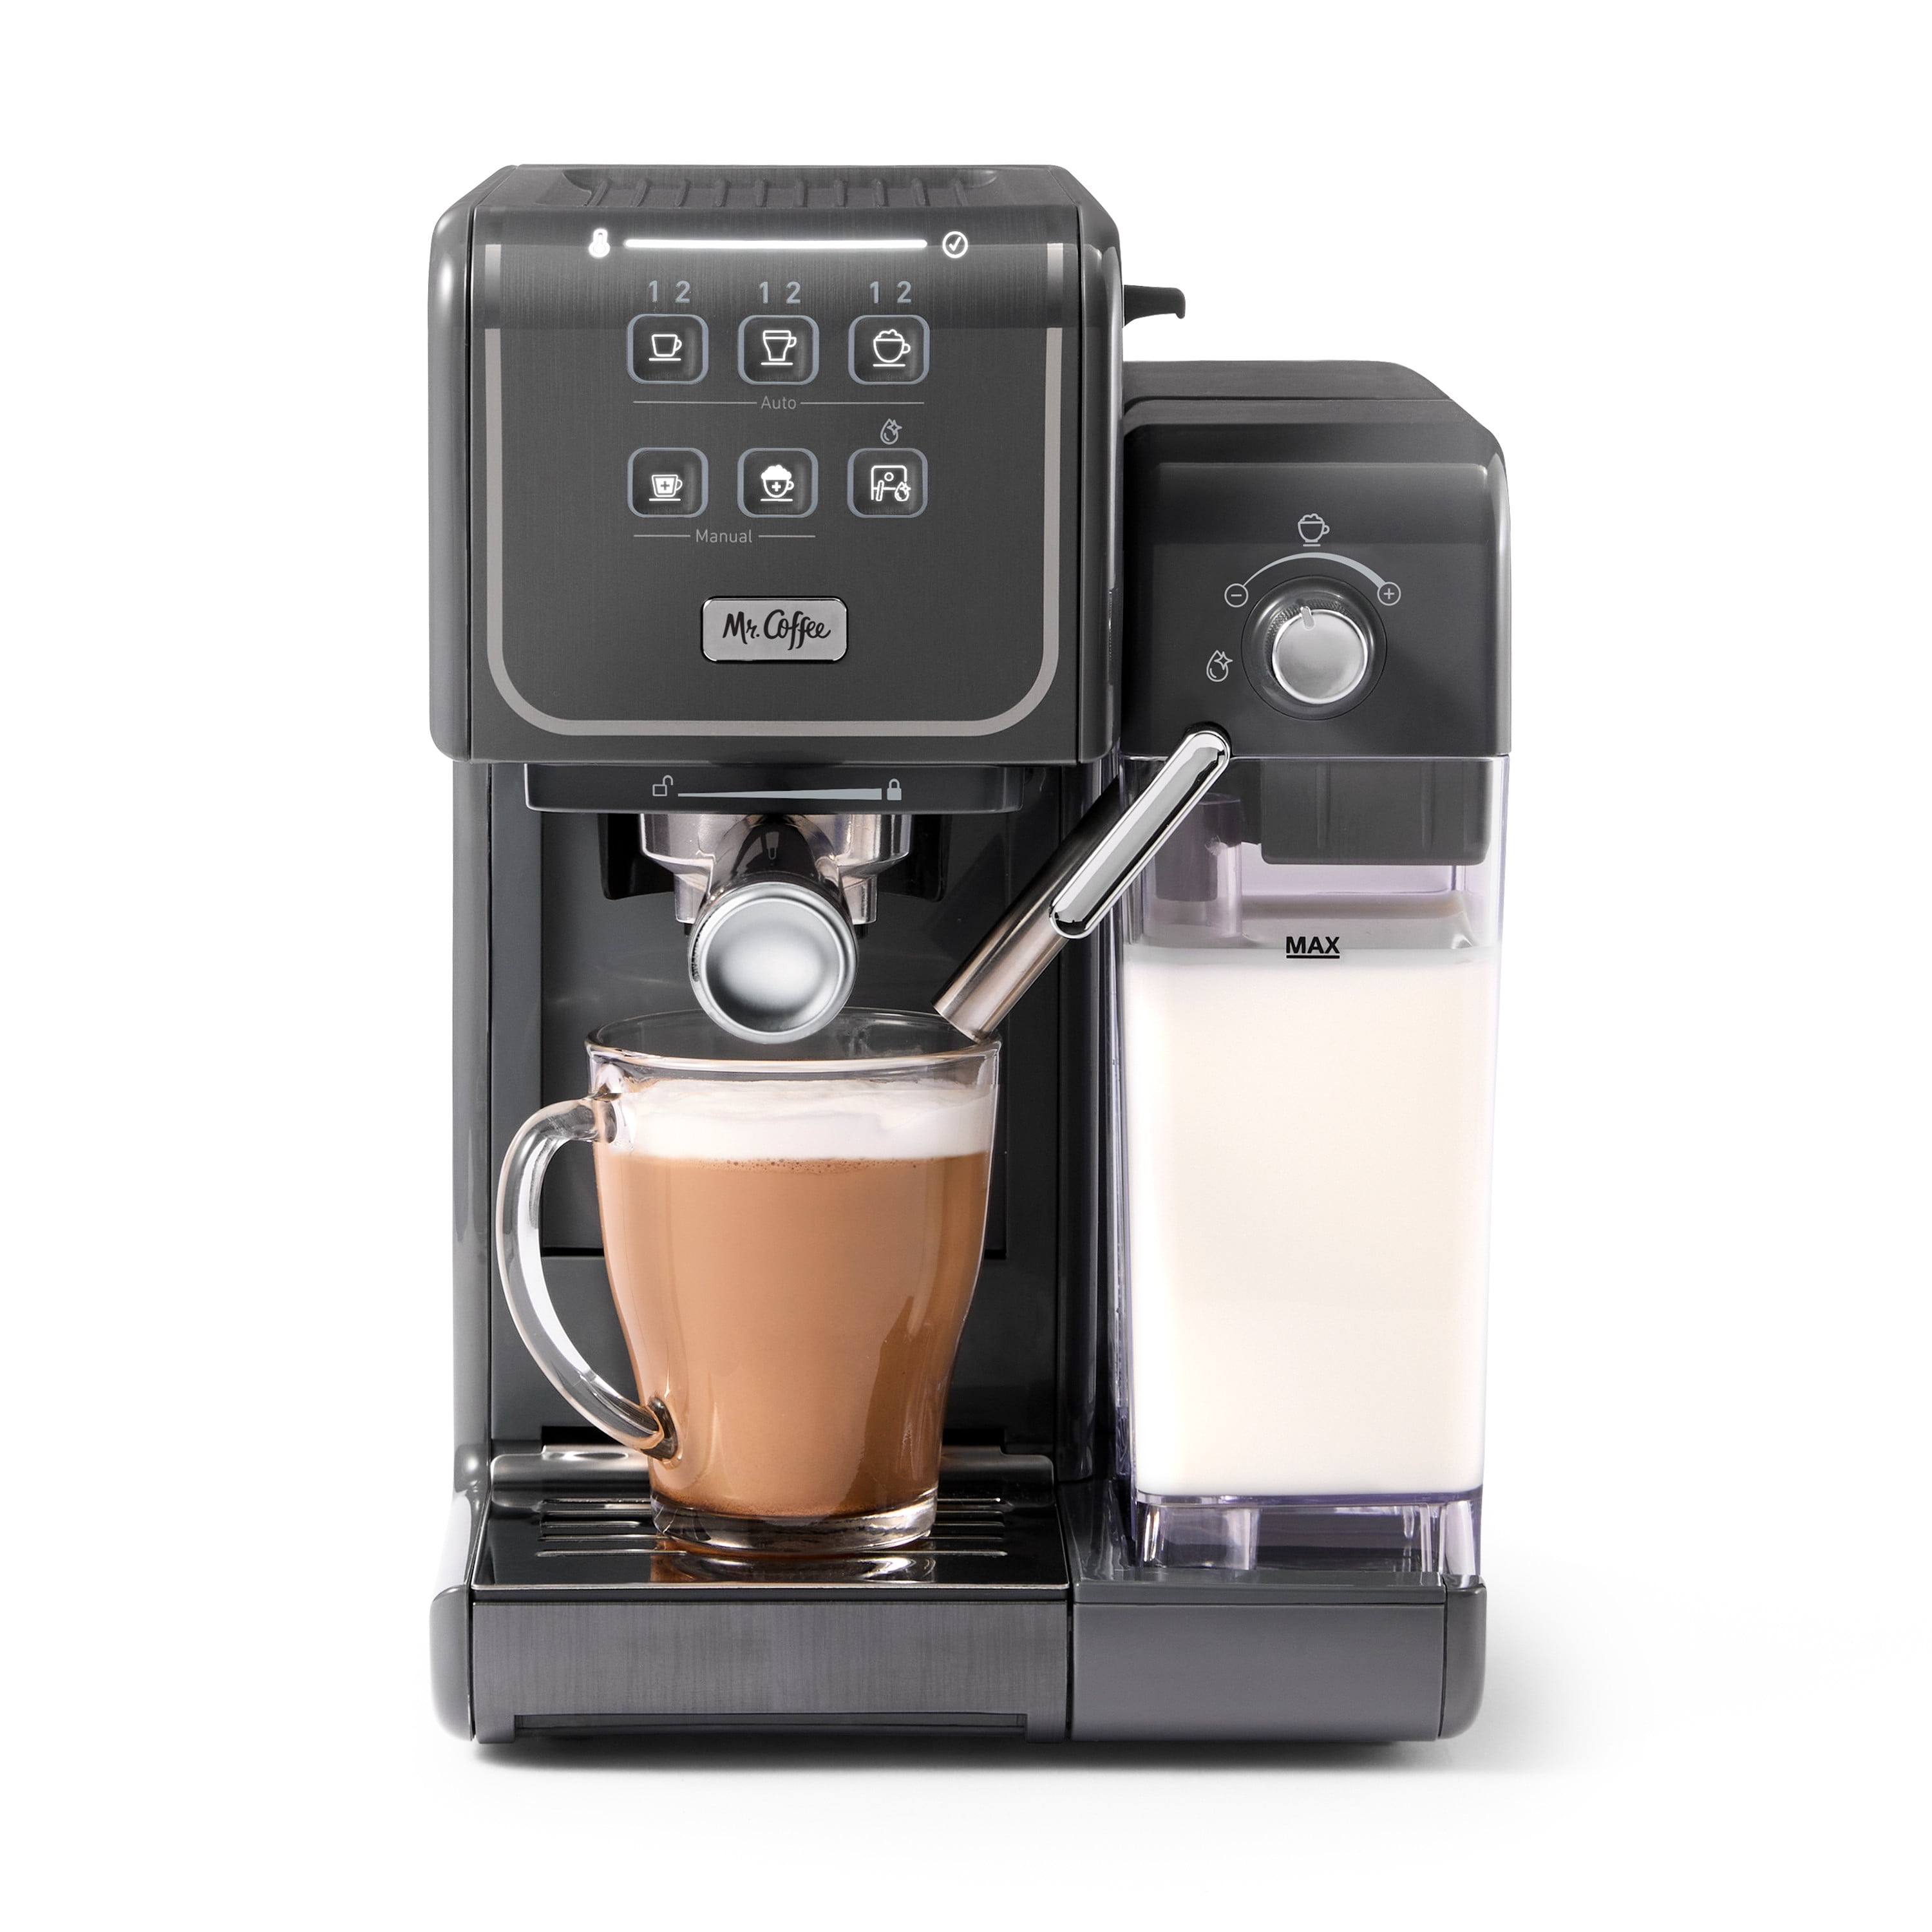 Vertellen Communisme een experiment doen Mr. Coffee New One-Touch CoffeeHouse Espresso, Cappuccino, and Latte Maker,  Grey - Walmart.com